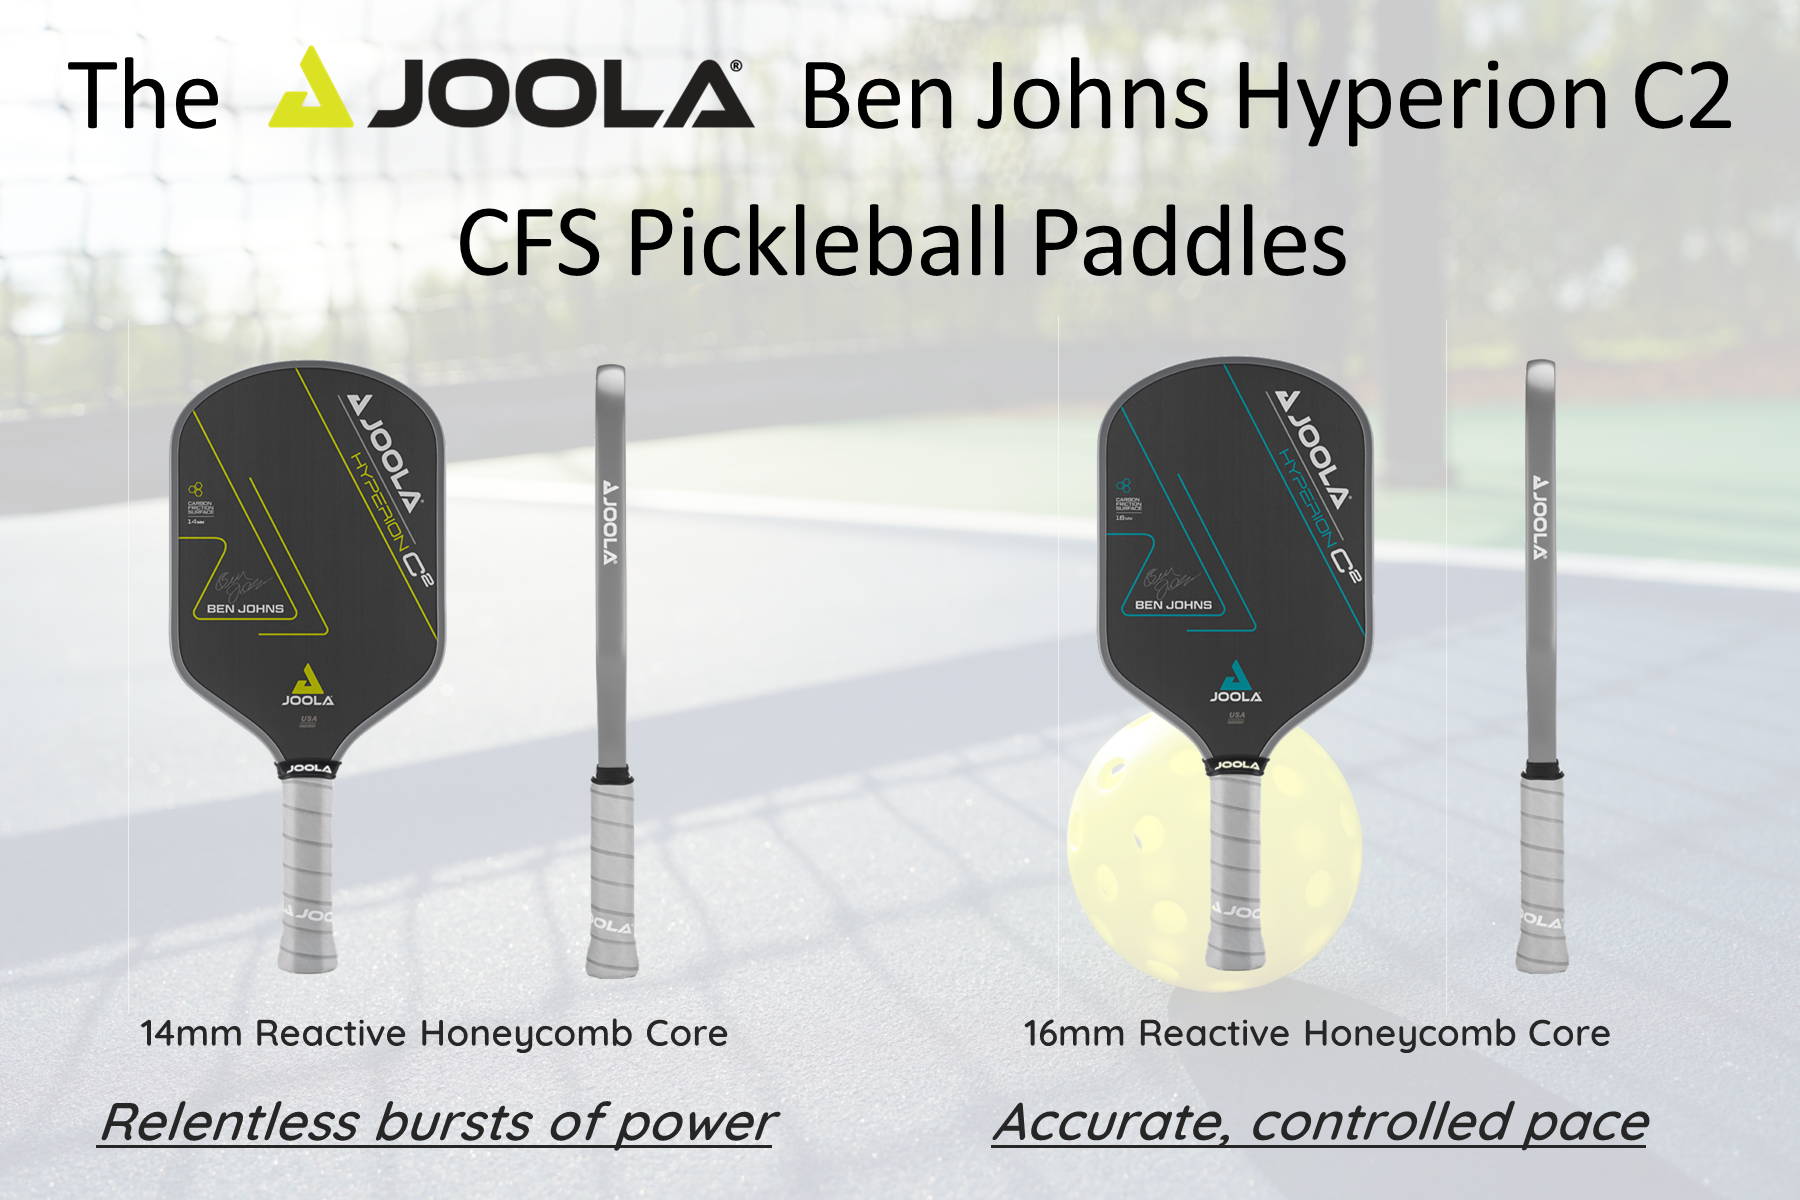 Joola Ben Johns Hyperion C2 CFS Pickleball Paddles